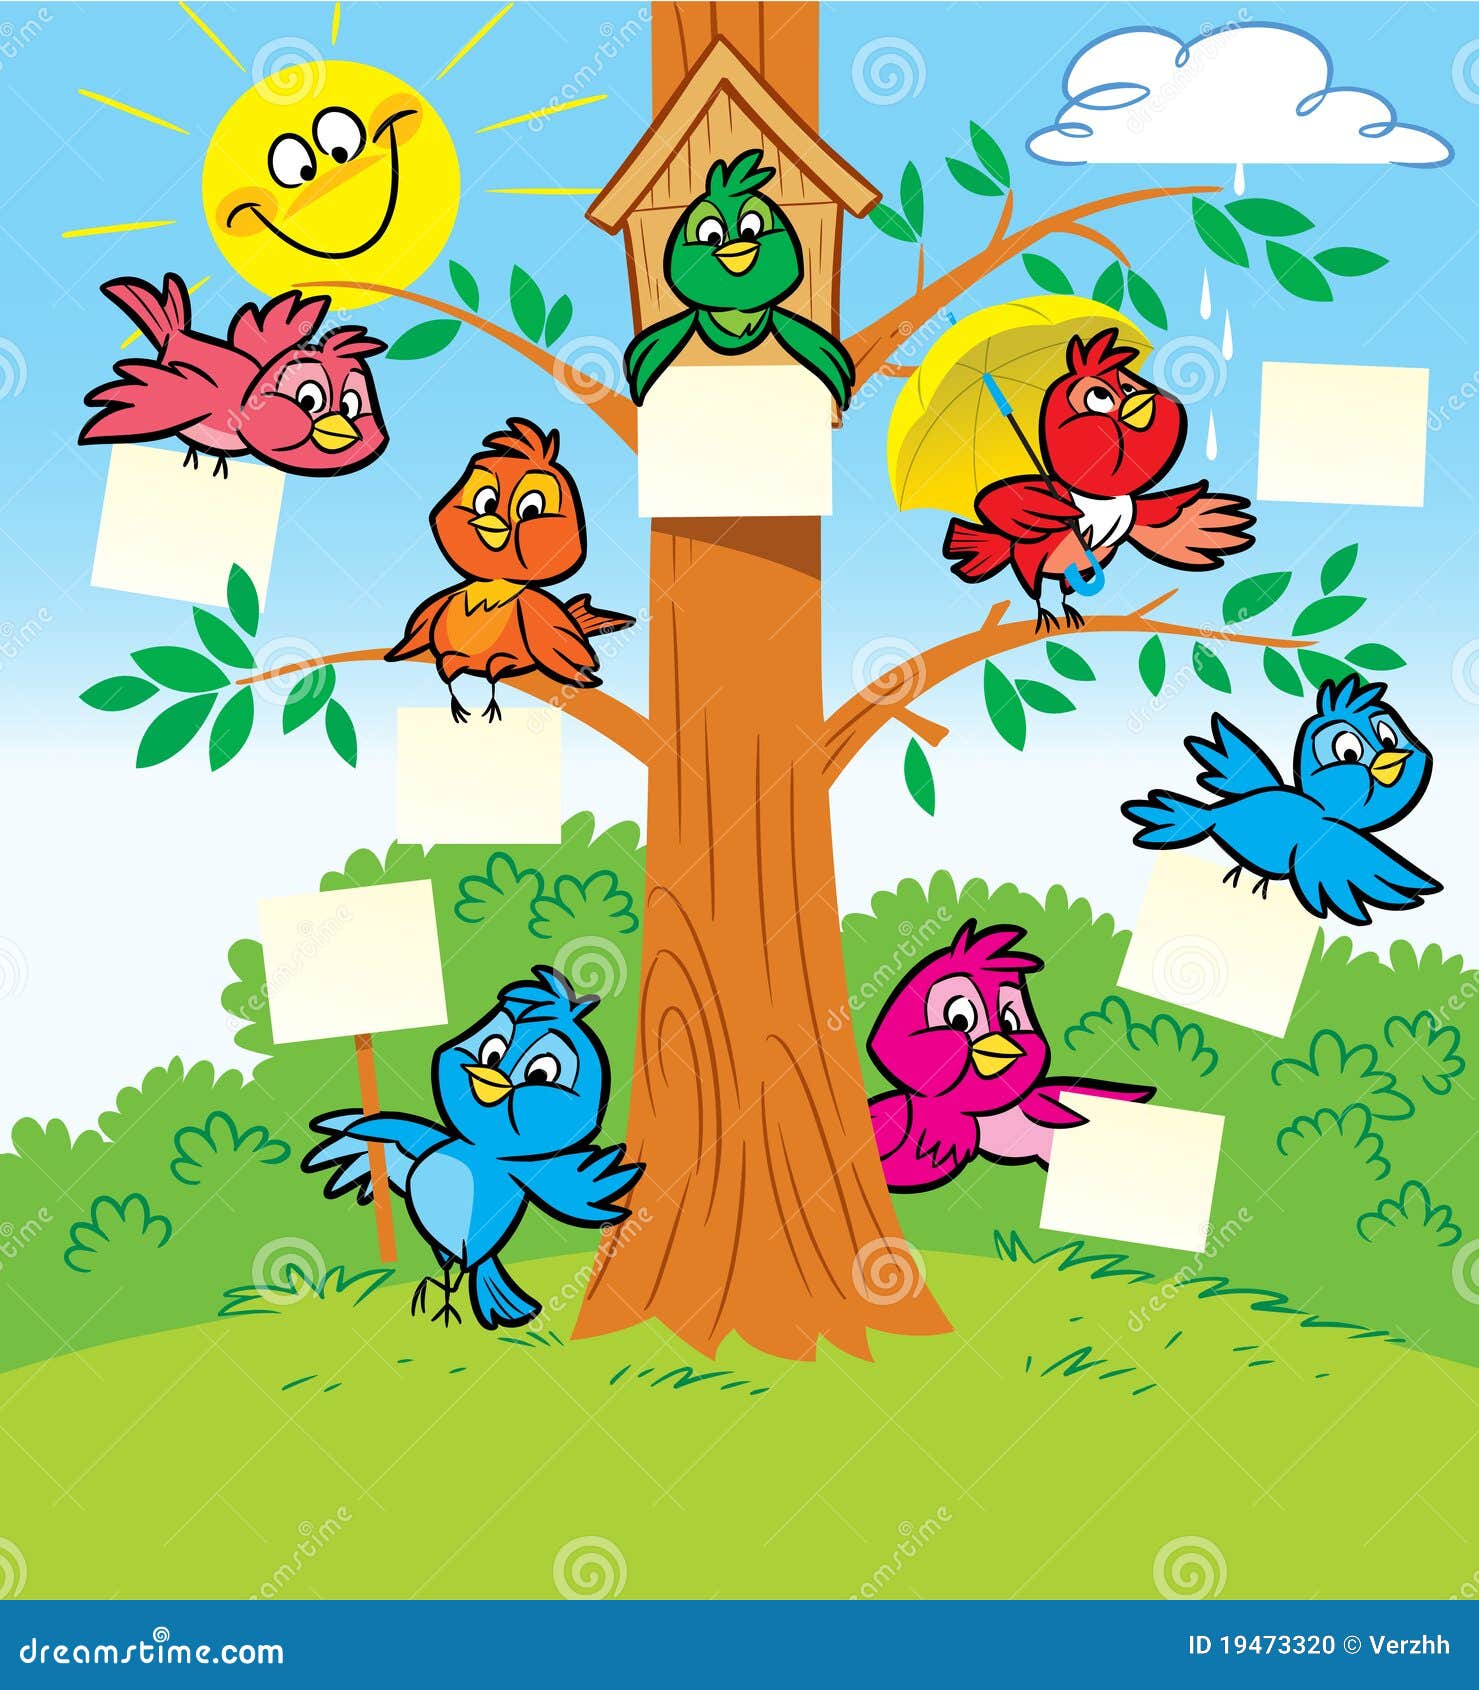 Сколько птиц сидит на дереве. Птичка на дереве мультяшная. Птички на дереве мультяшные. Дерева с птичками детский. Детский рисунок птички на дереве.